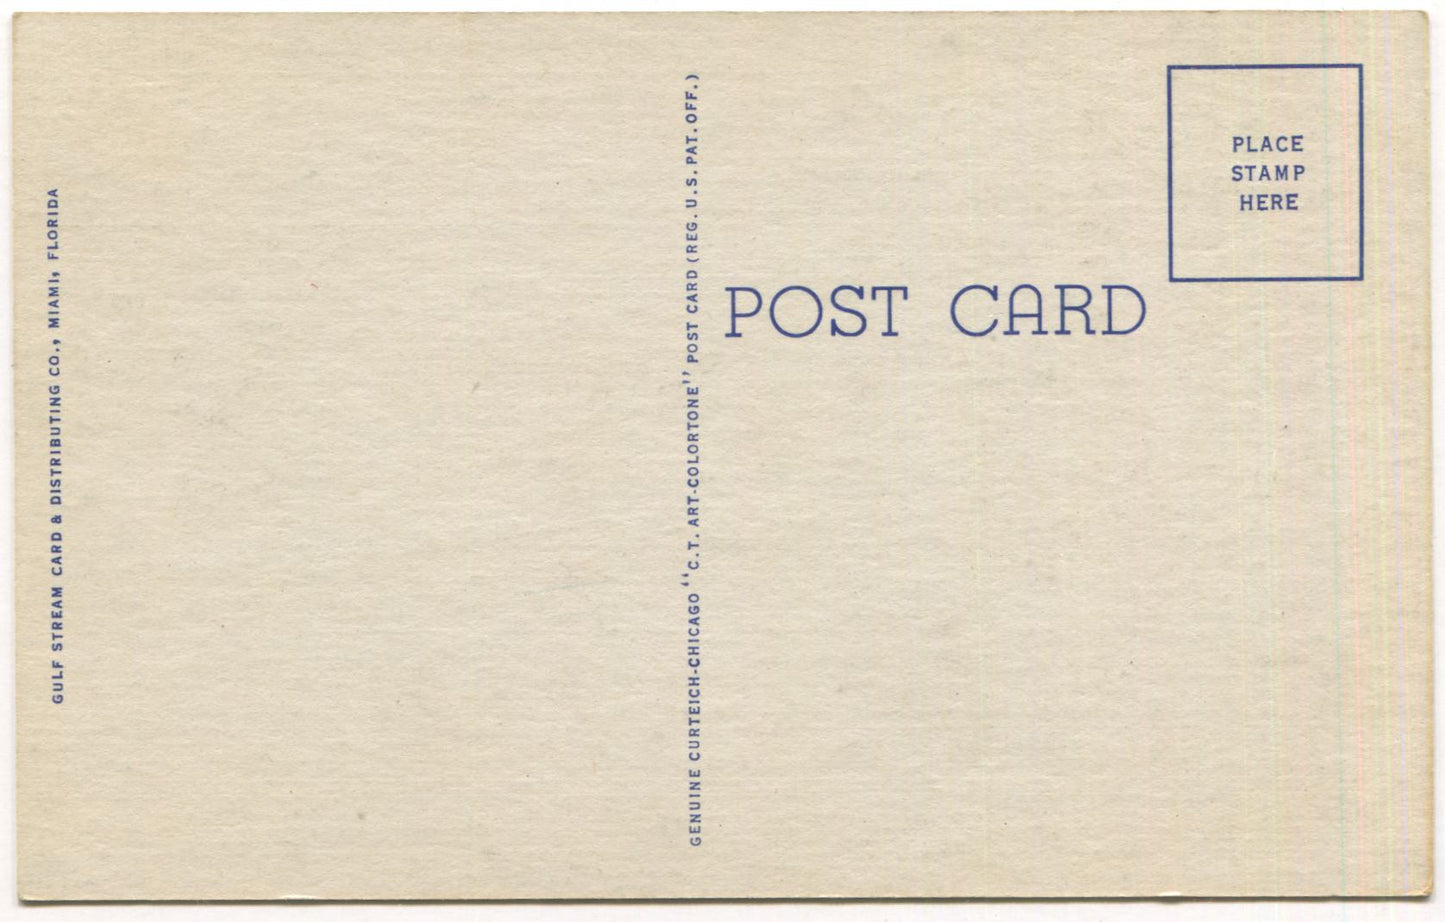 Jai Alai Fronton, Dania, Florida Vintage Postcard